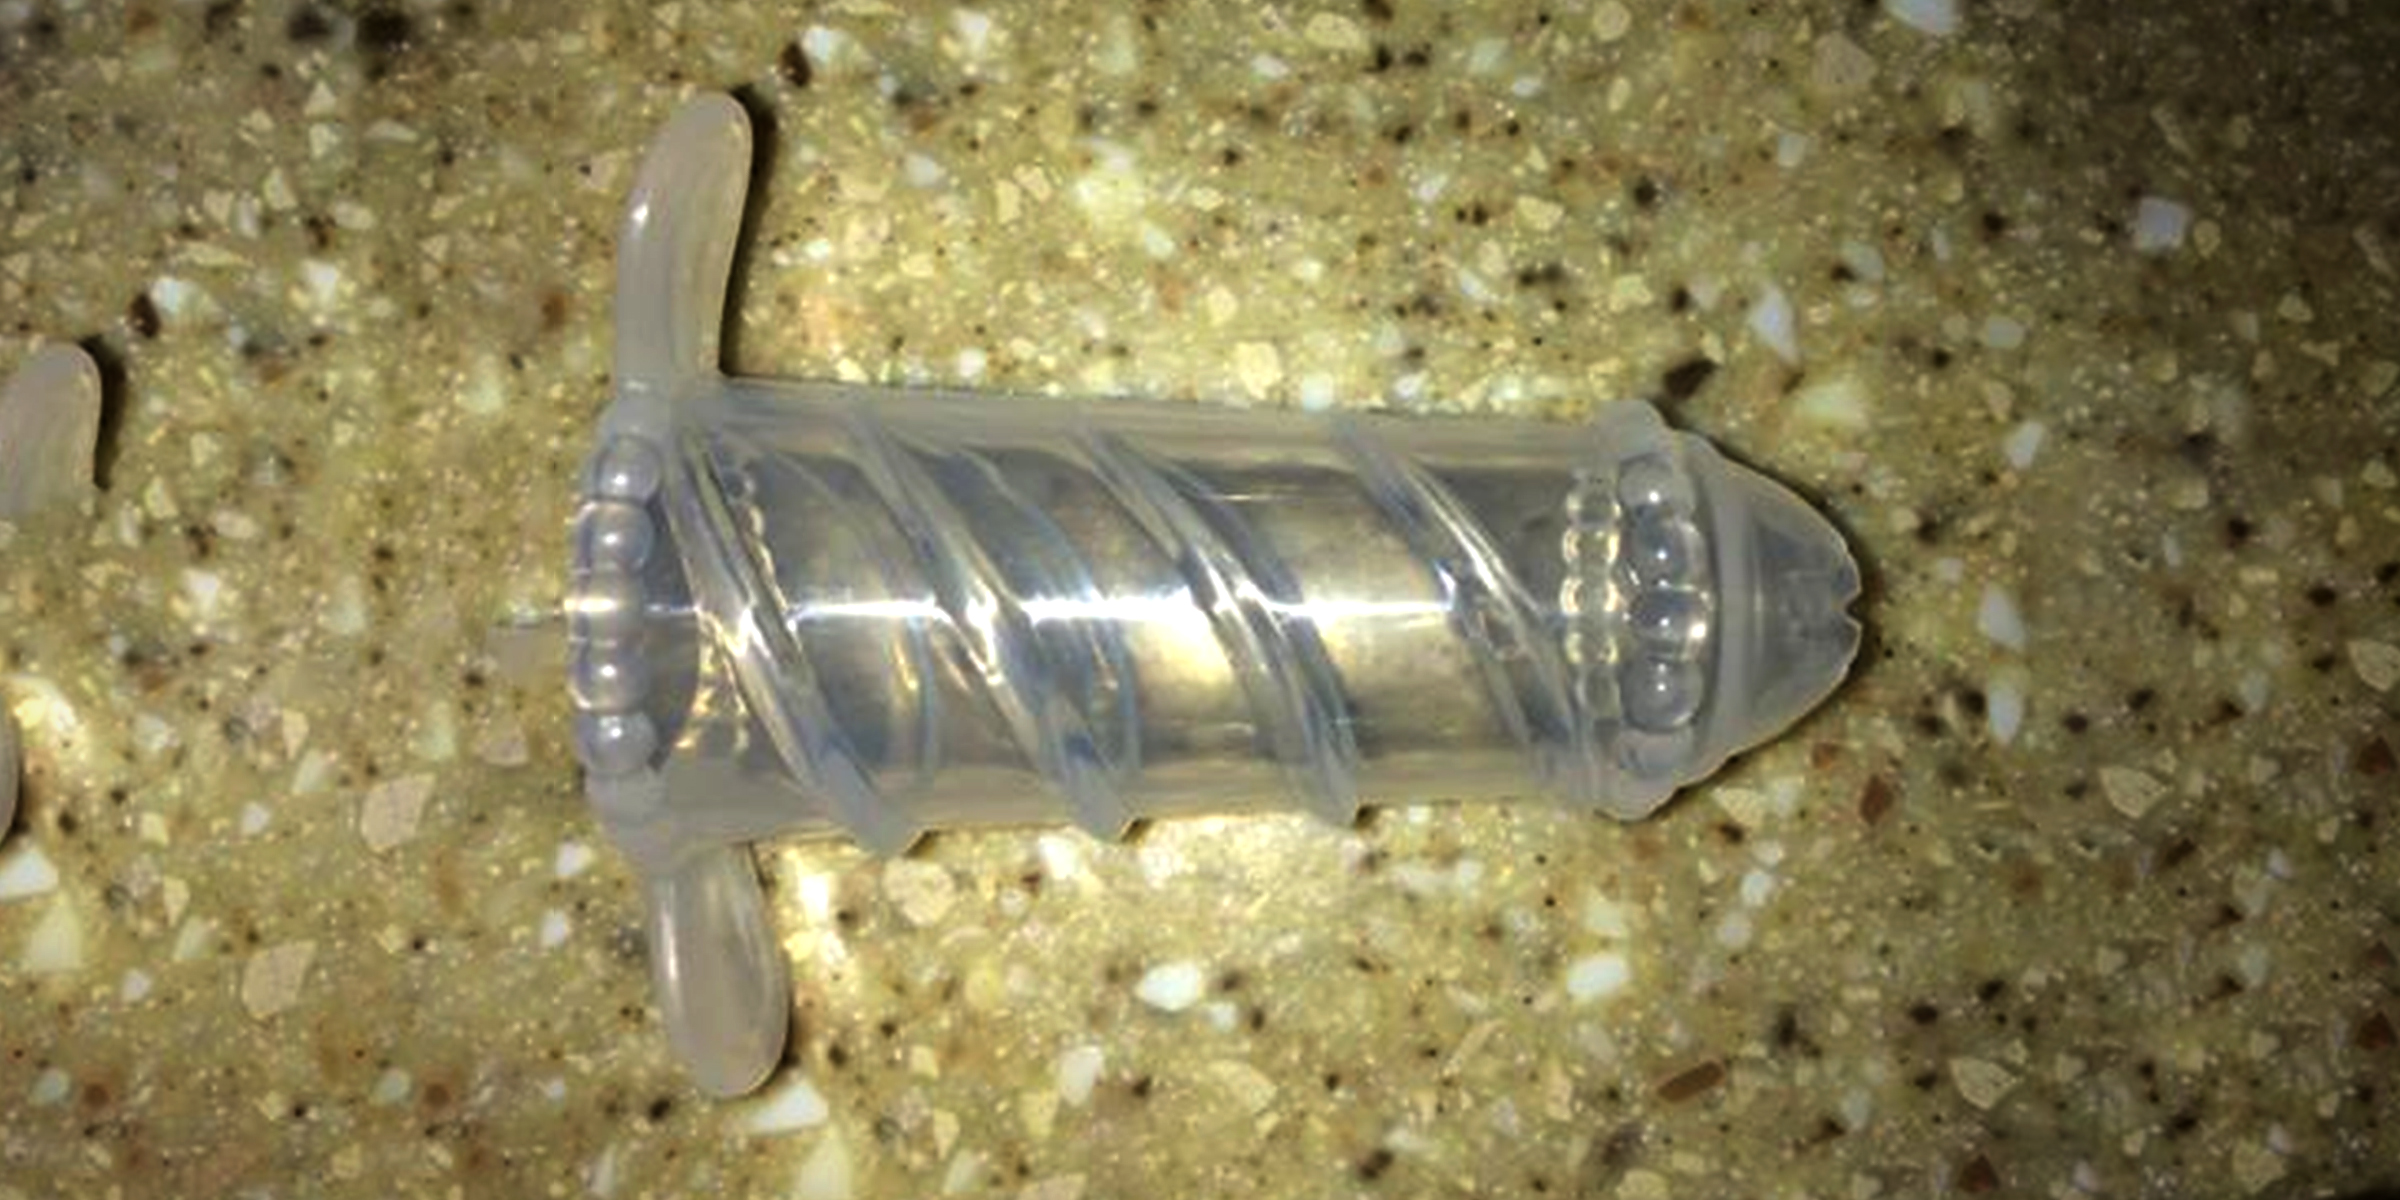 A strange plastic-looking object | Source: Twitter.com/householderj